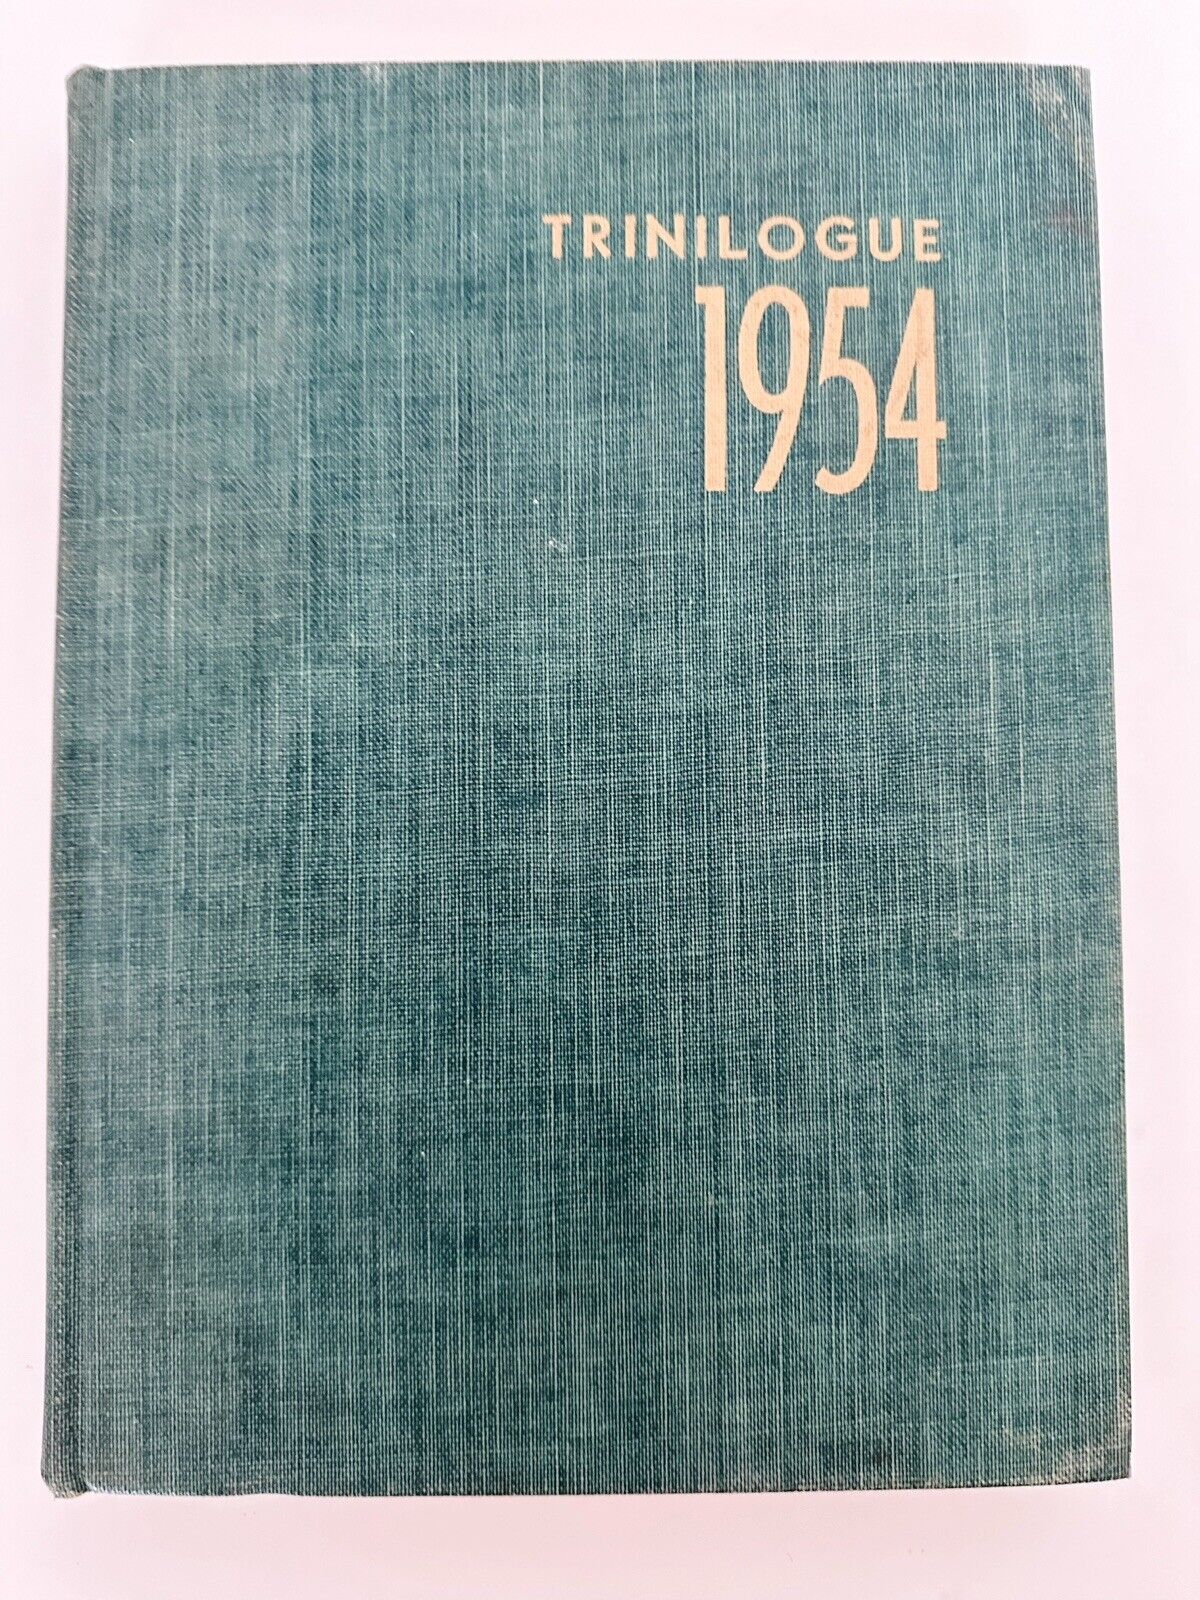 Trinity College 1954 Yearbook Washington Dc. “Trinilogue”